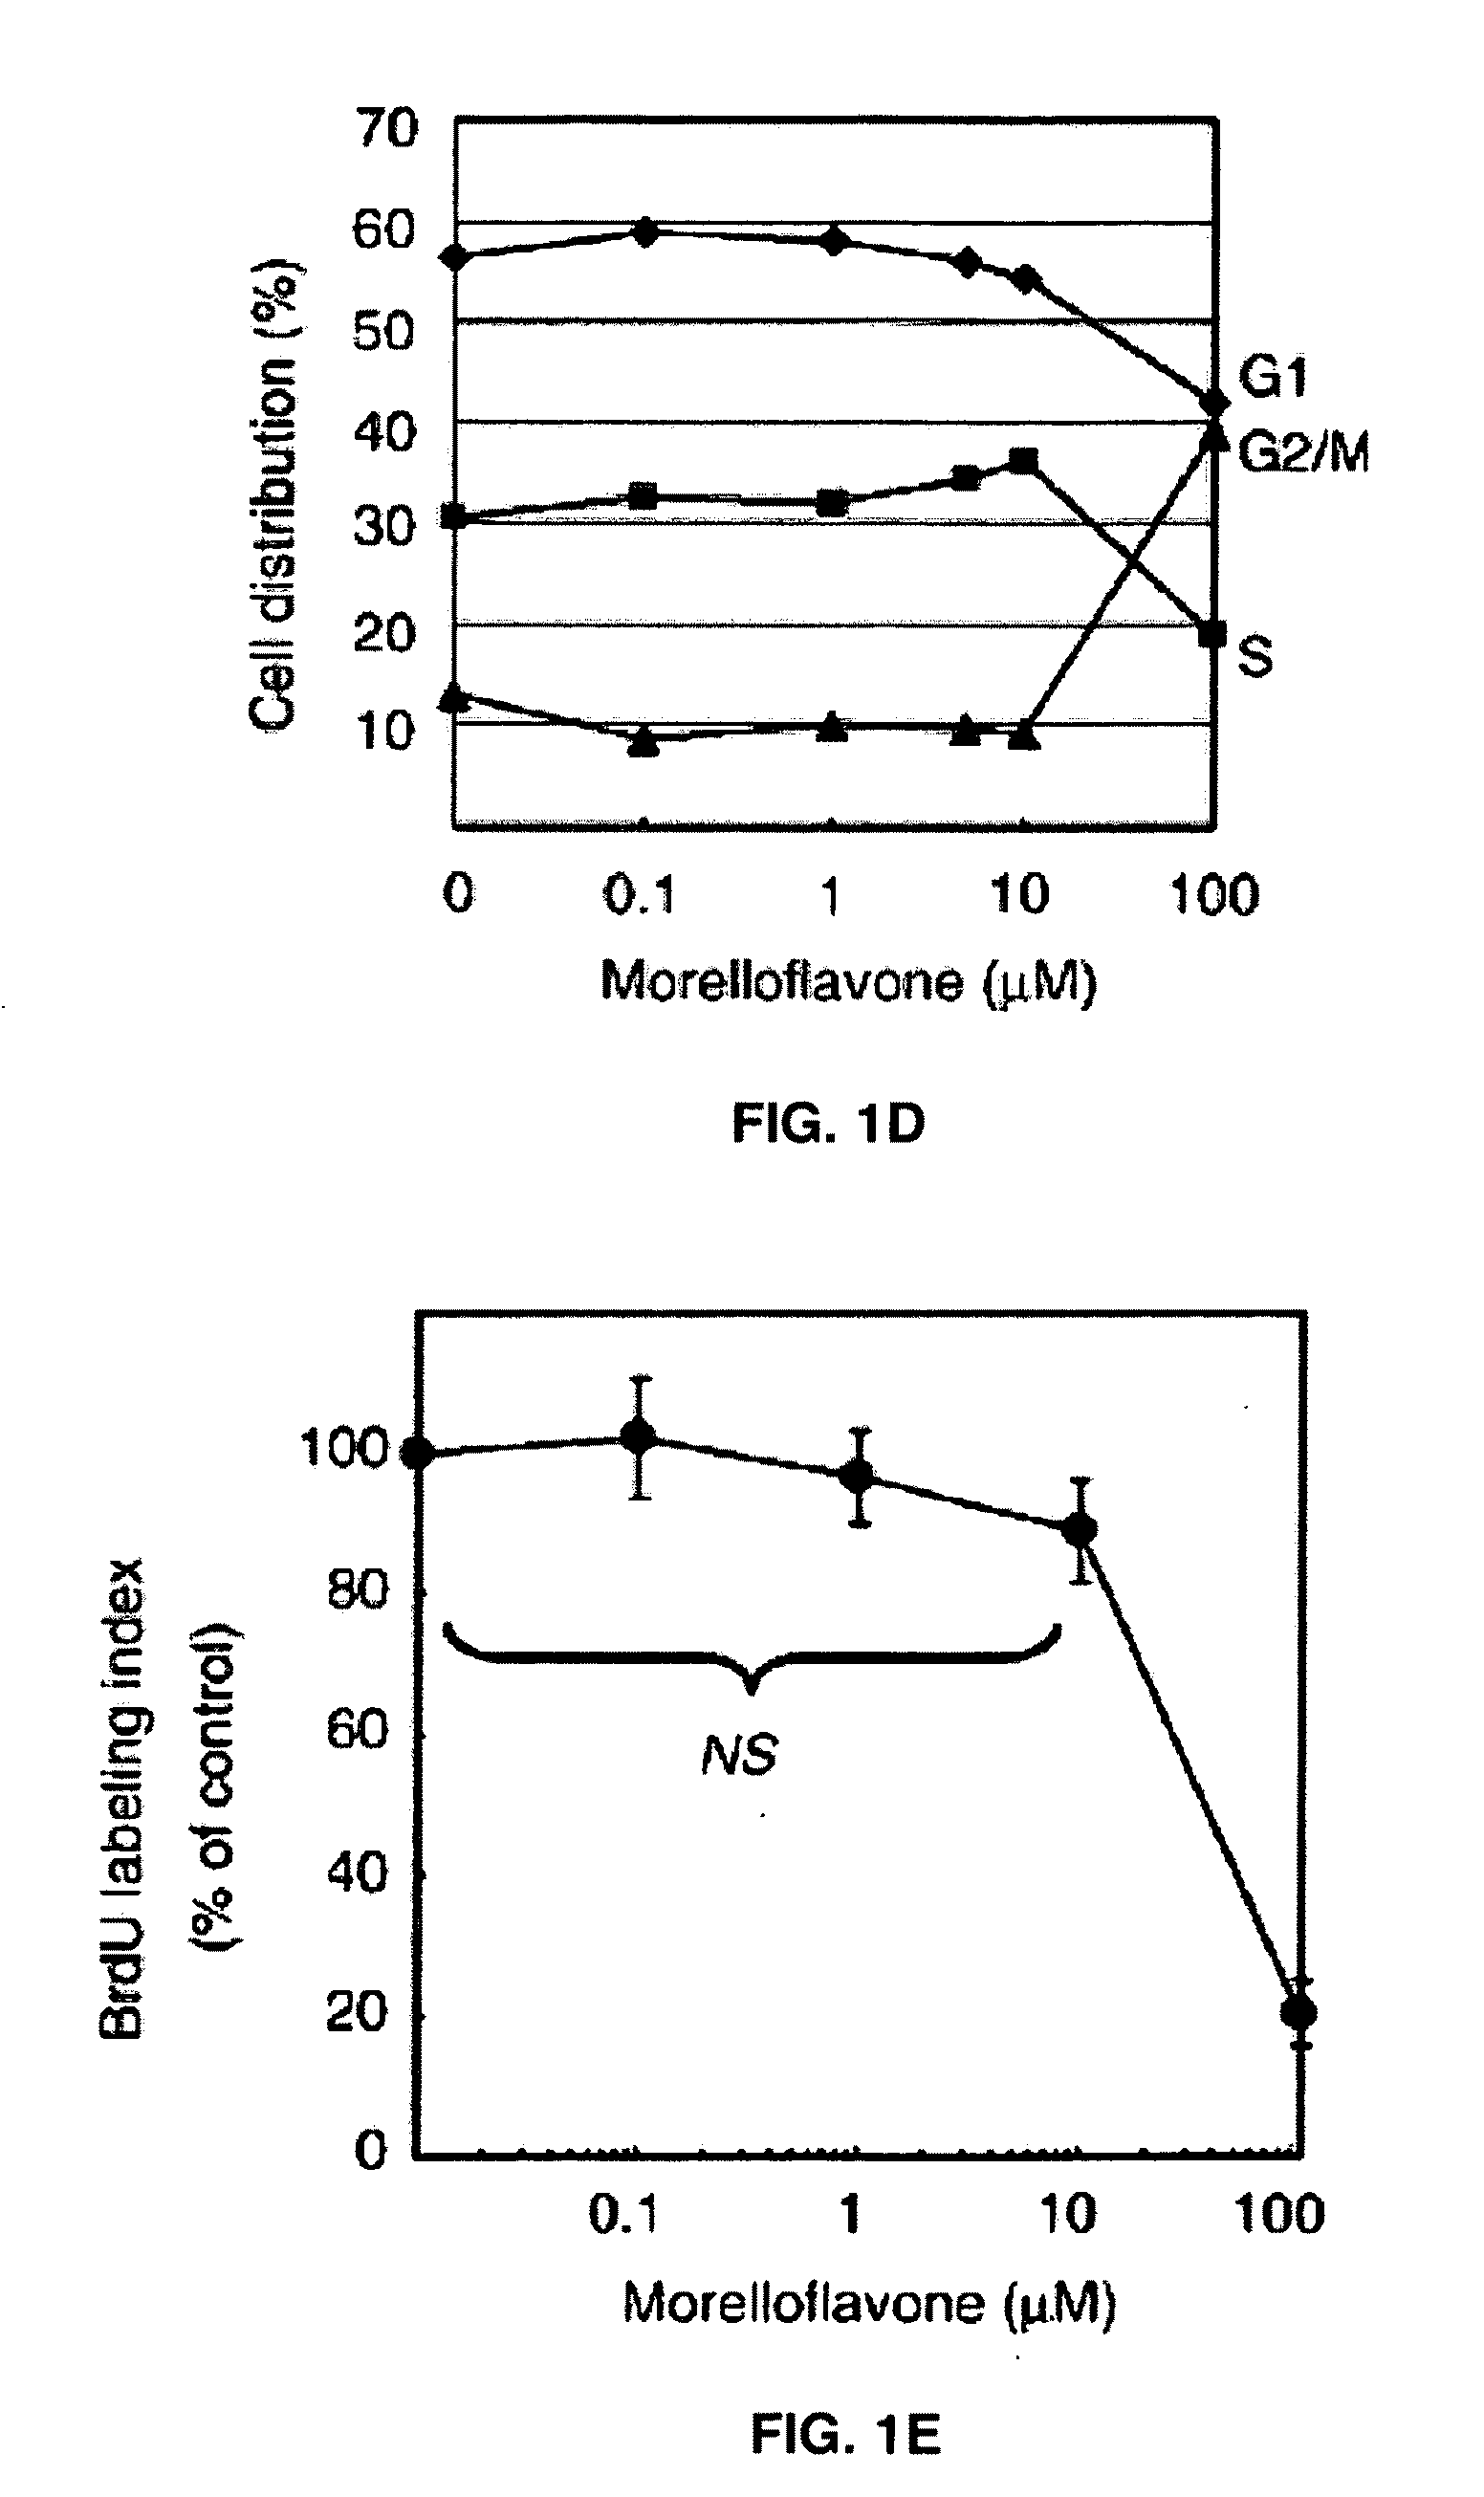 Uses of morelloflavone